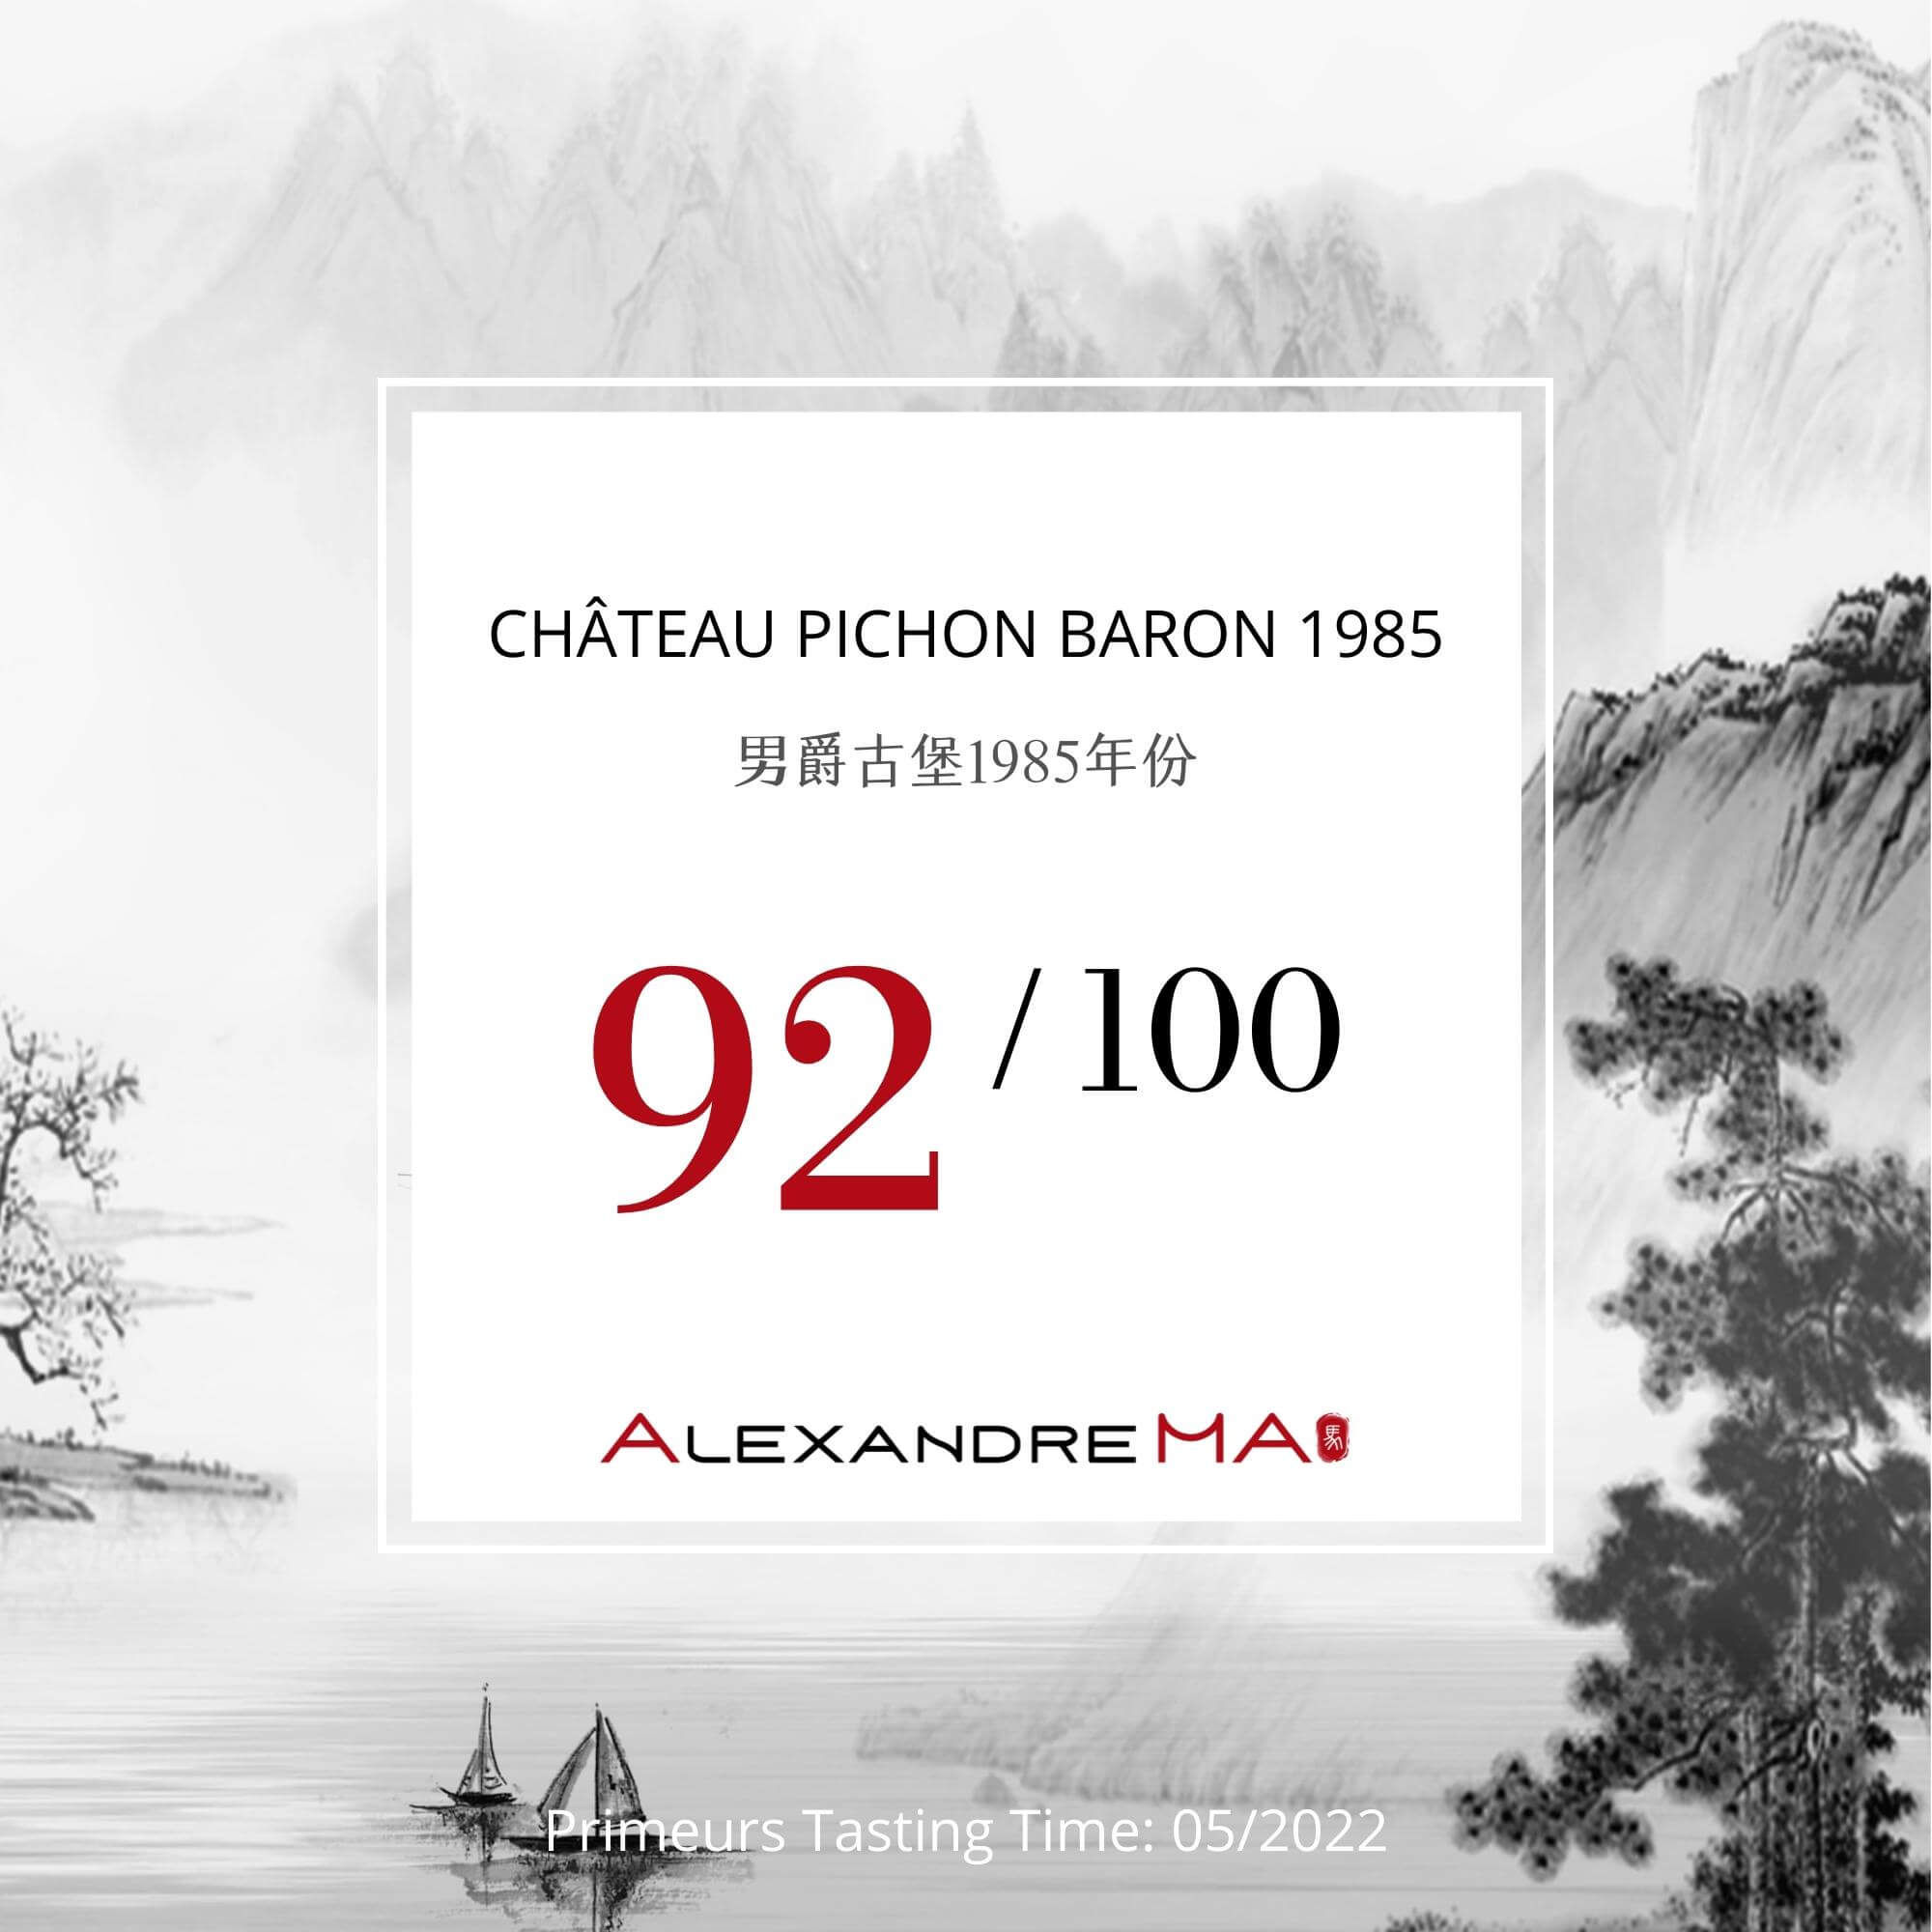 Château Pichon Baron 1985 - Alexandre MA